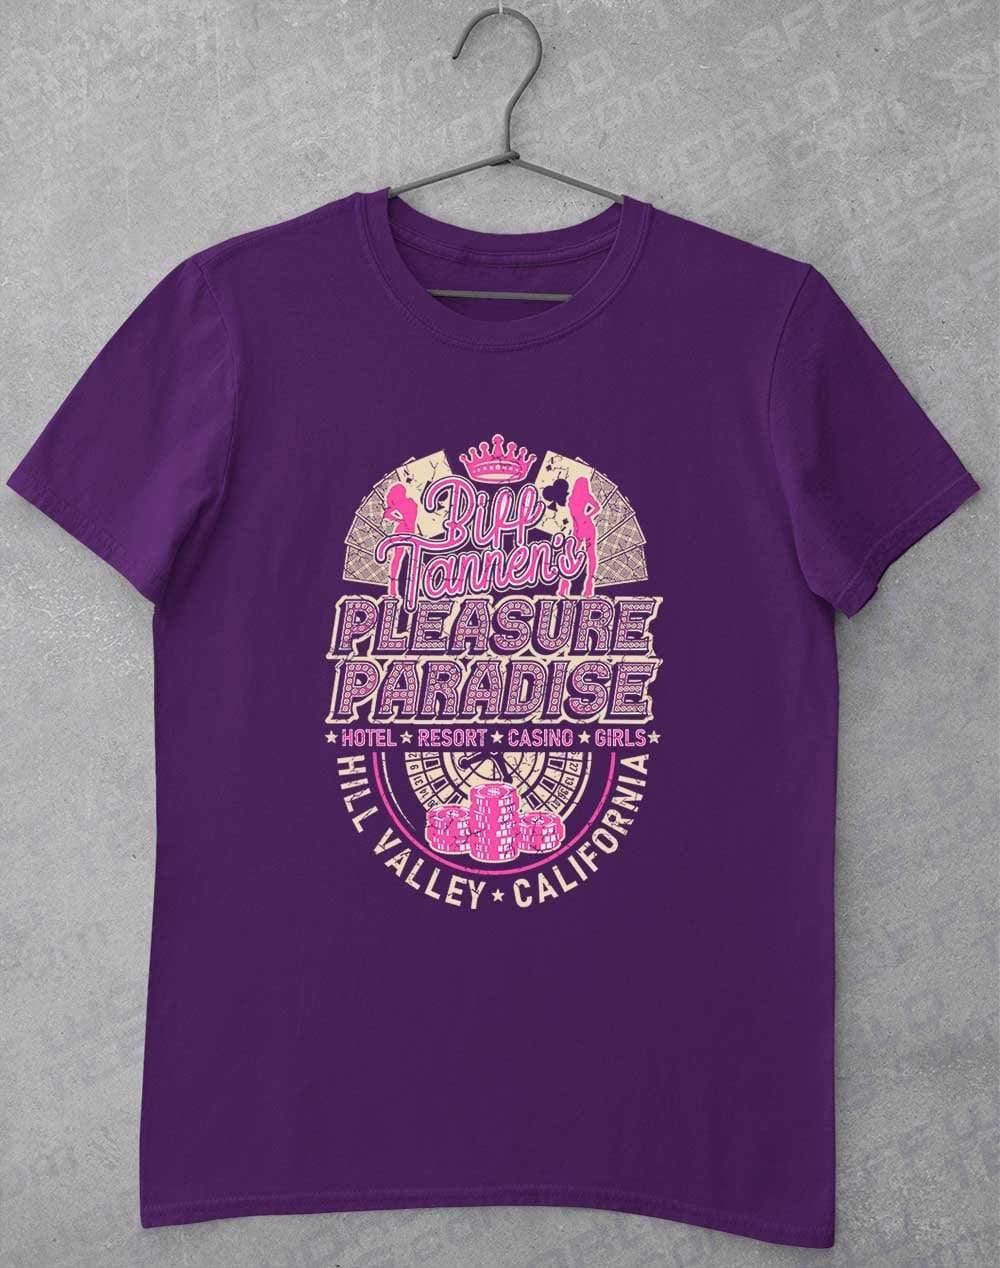 Biff Tannen's Pleasure Paradise T-Shirt S / Purple  - Off World Tees